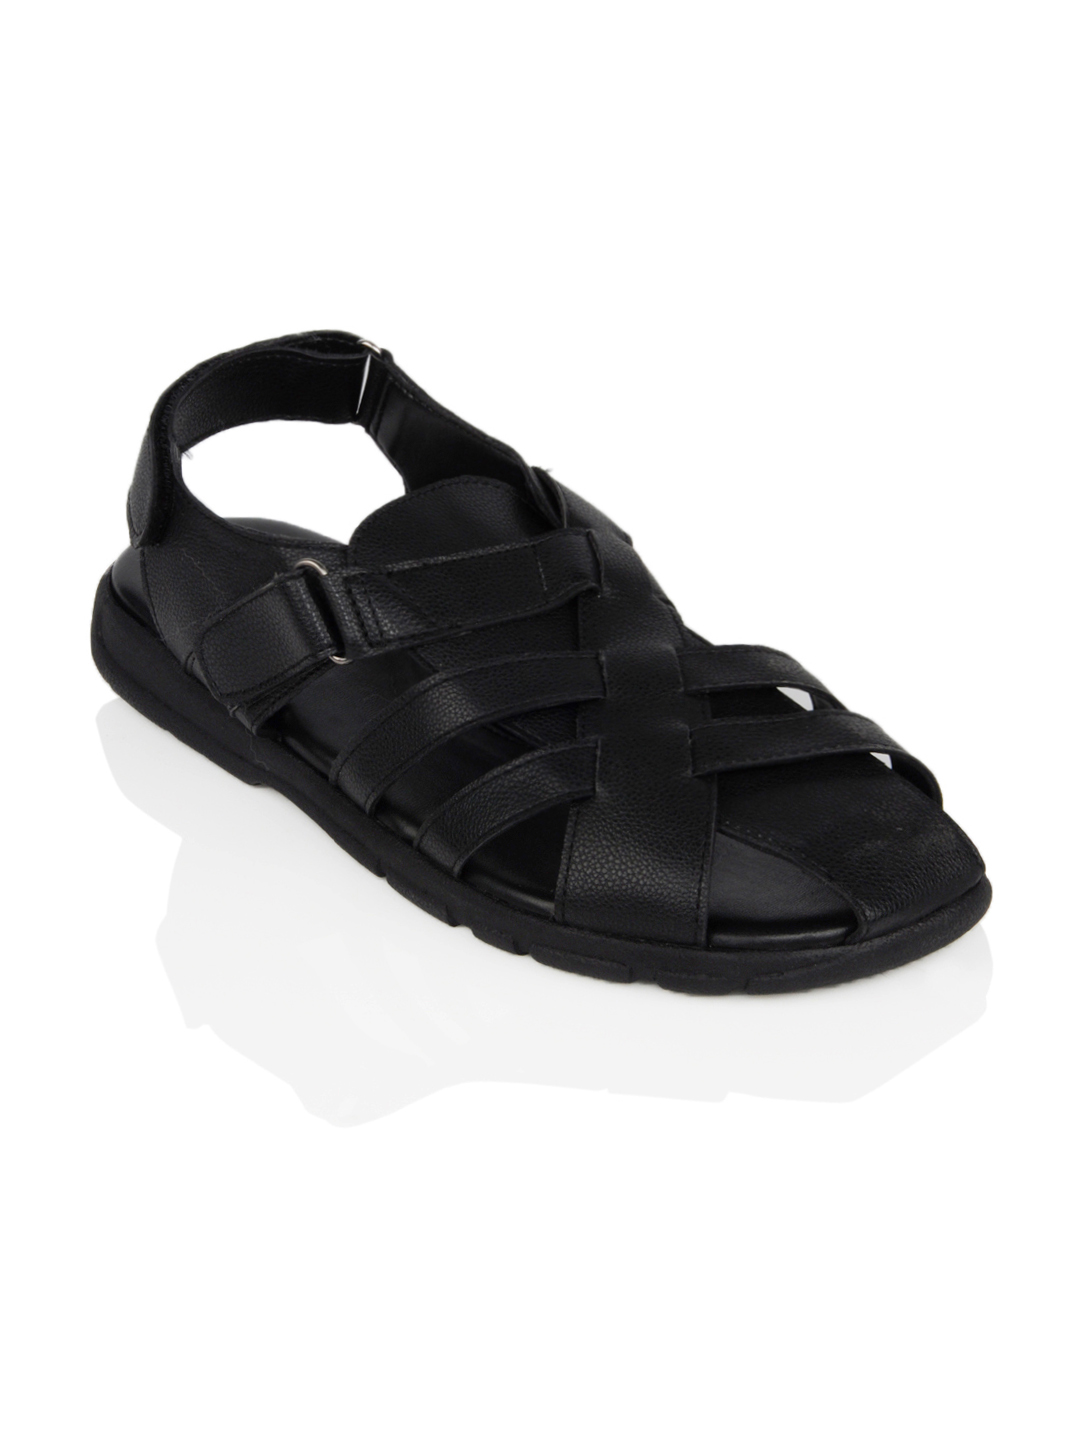 US-Polo-Assn-Black-Sandals-7847-23513-1-product.jpg